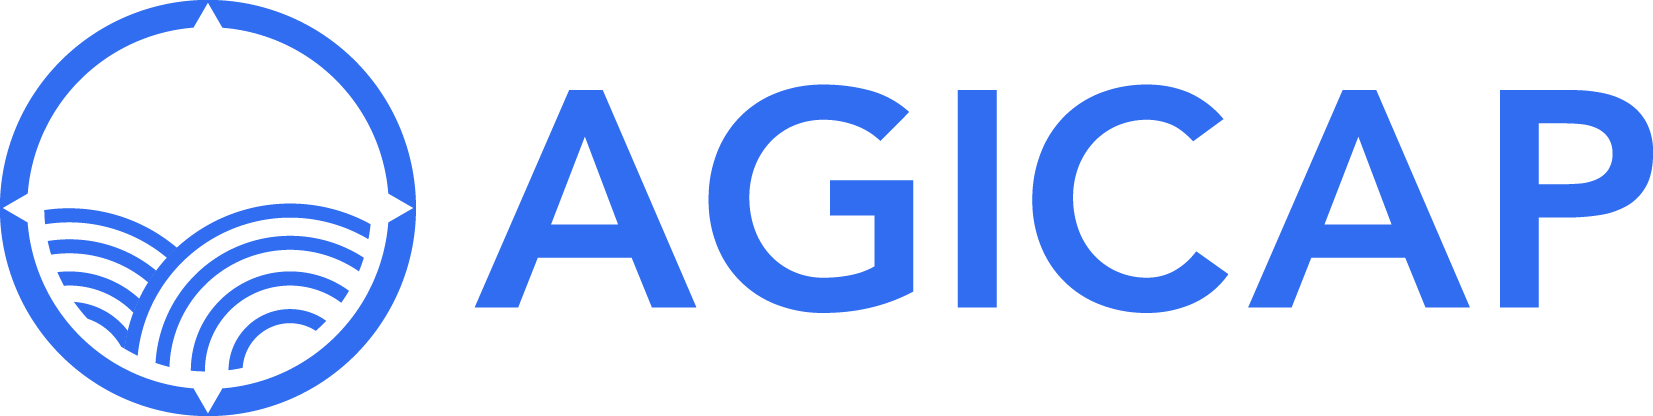 Agicap logo